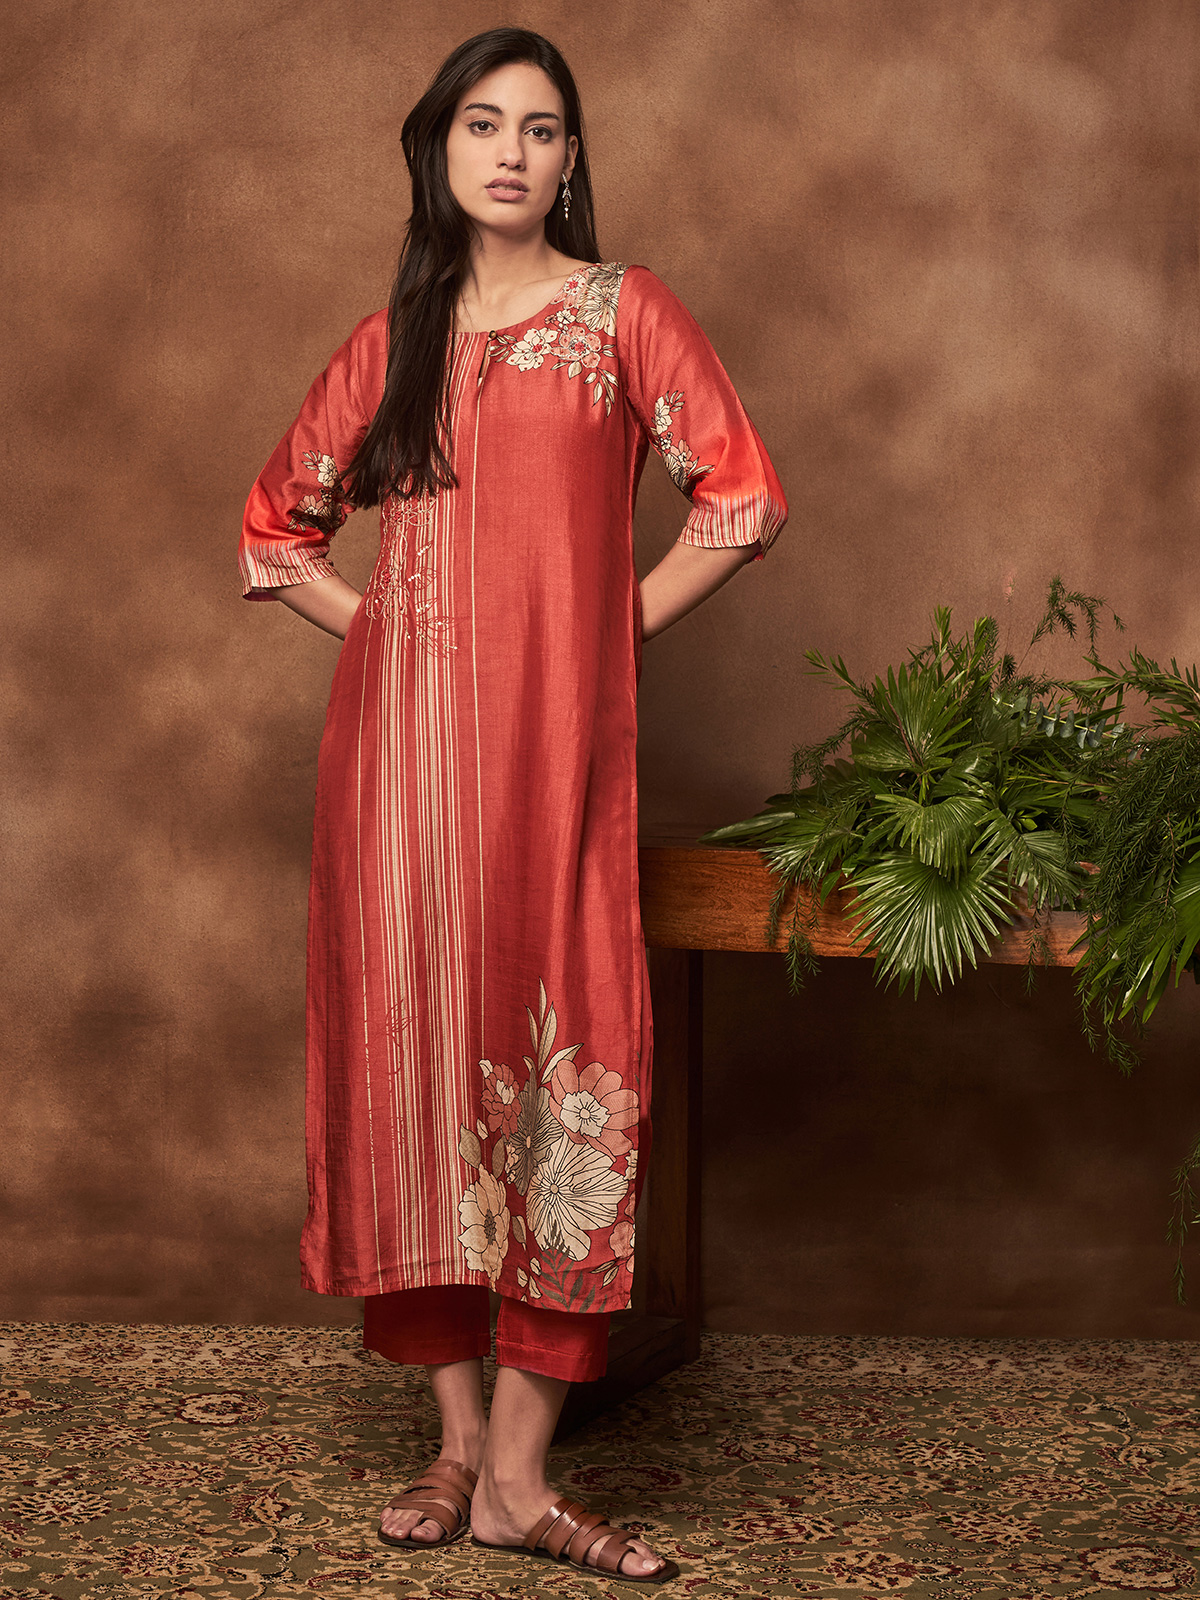 Buy Kshirsagar Fashion Women's Rayon Fabric Rust color Designer Look Kurti  at Amazon.in